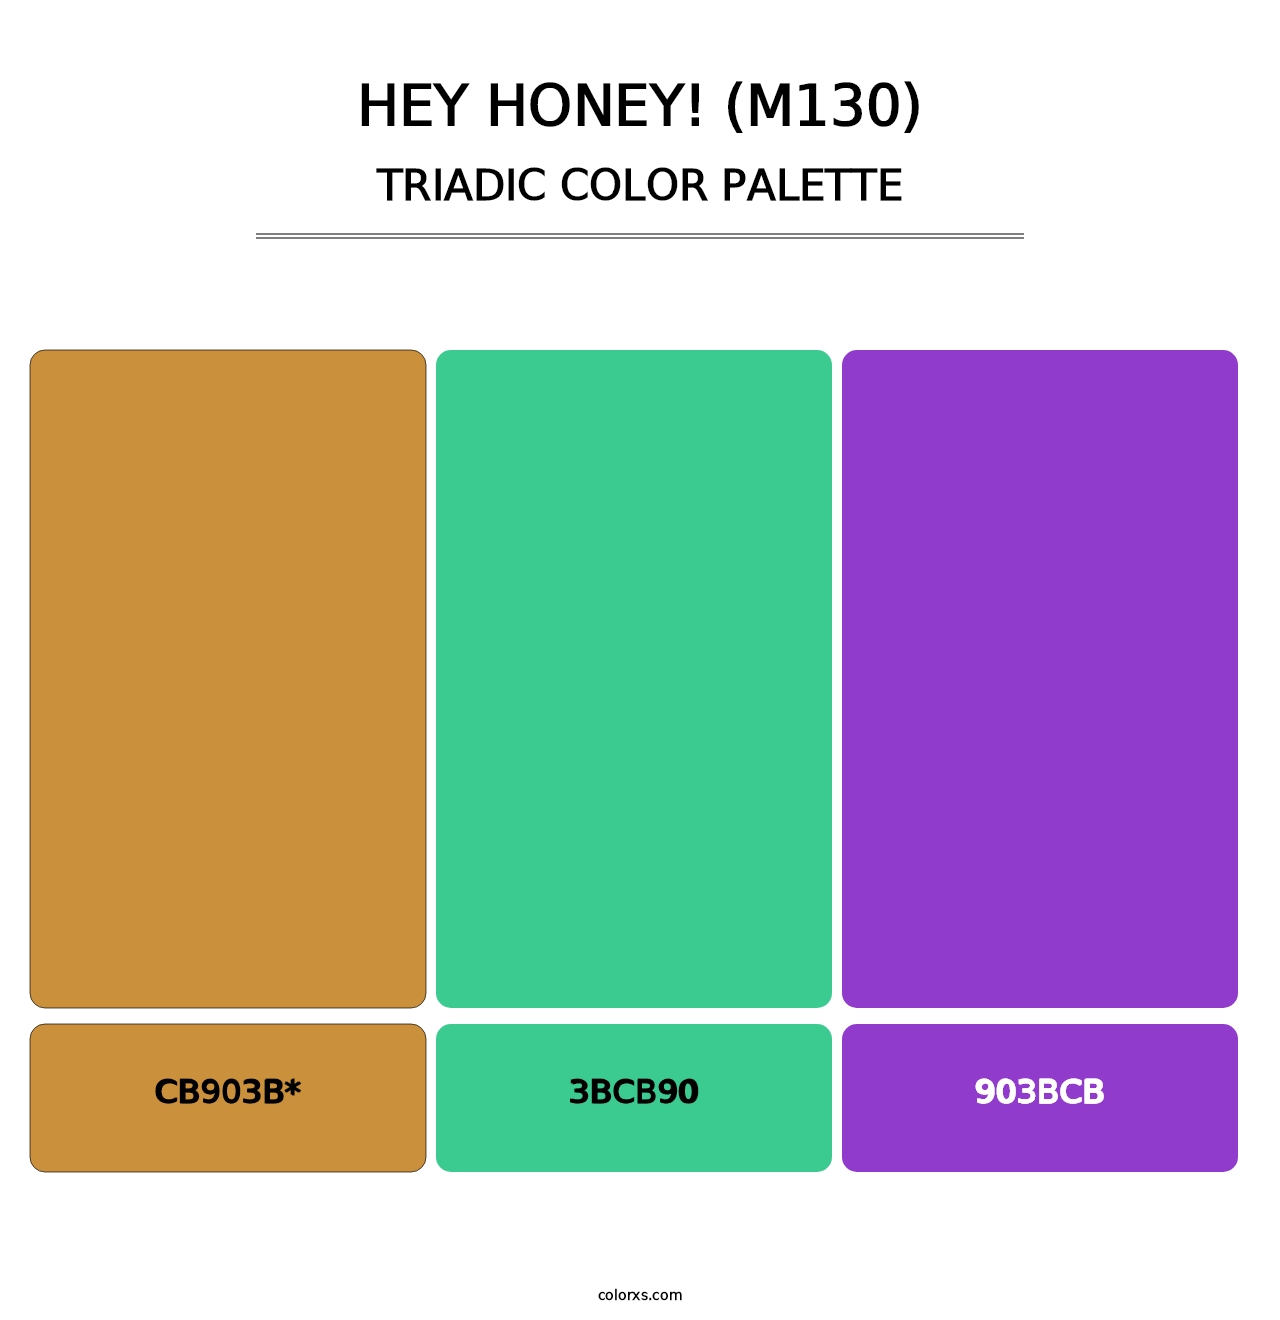 Hey Honey! (M130) - Triadic Color Palette